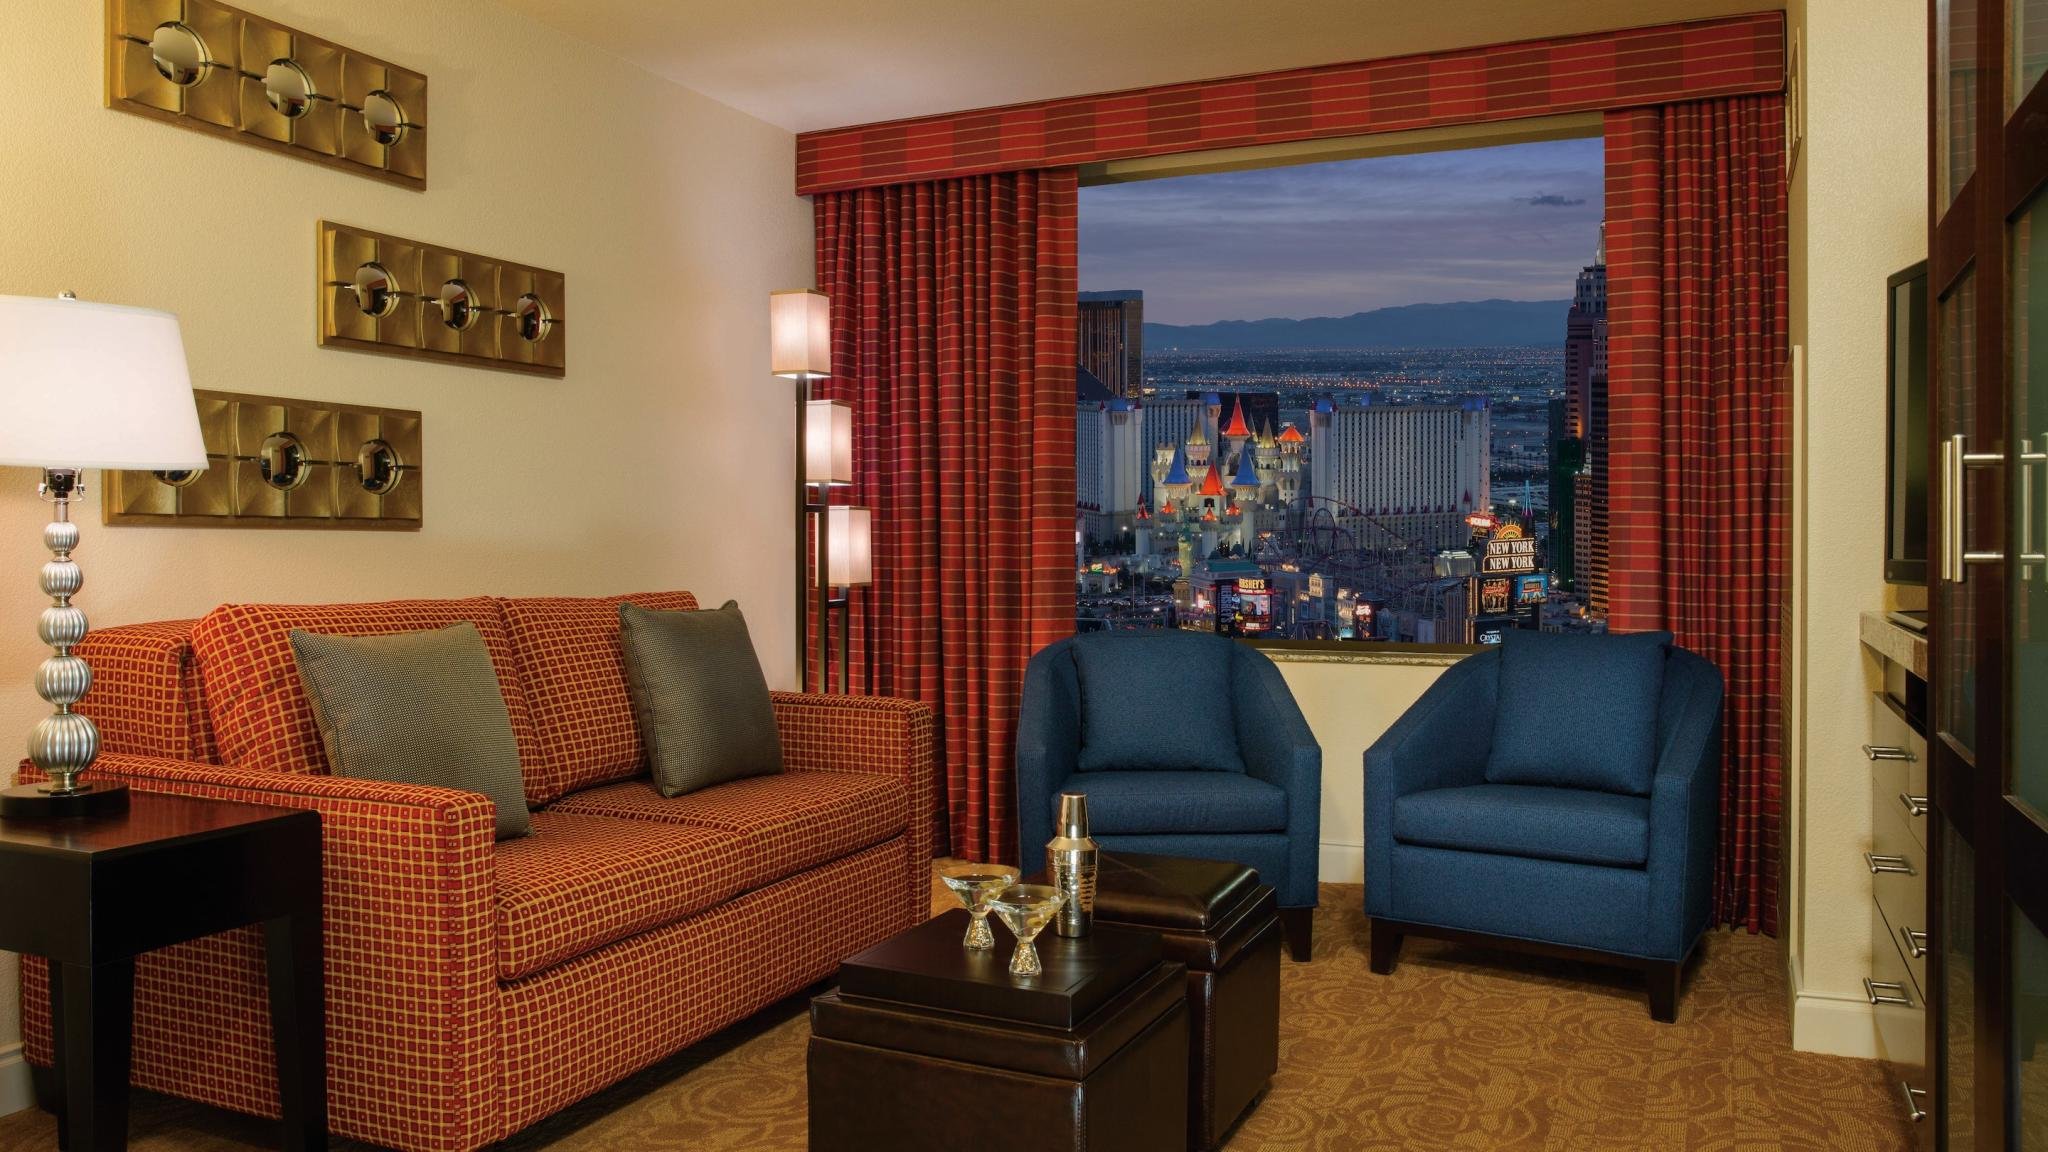 Marriott Grand Chateau - Luxury timeshare in Las VegasParadise Timeshare  Resale